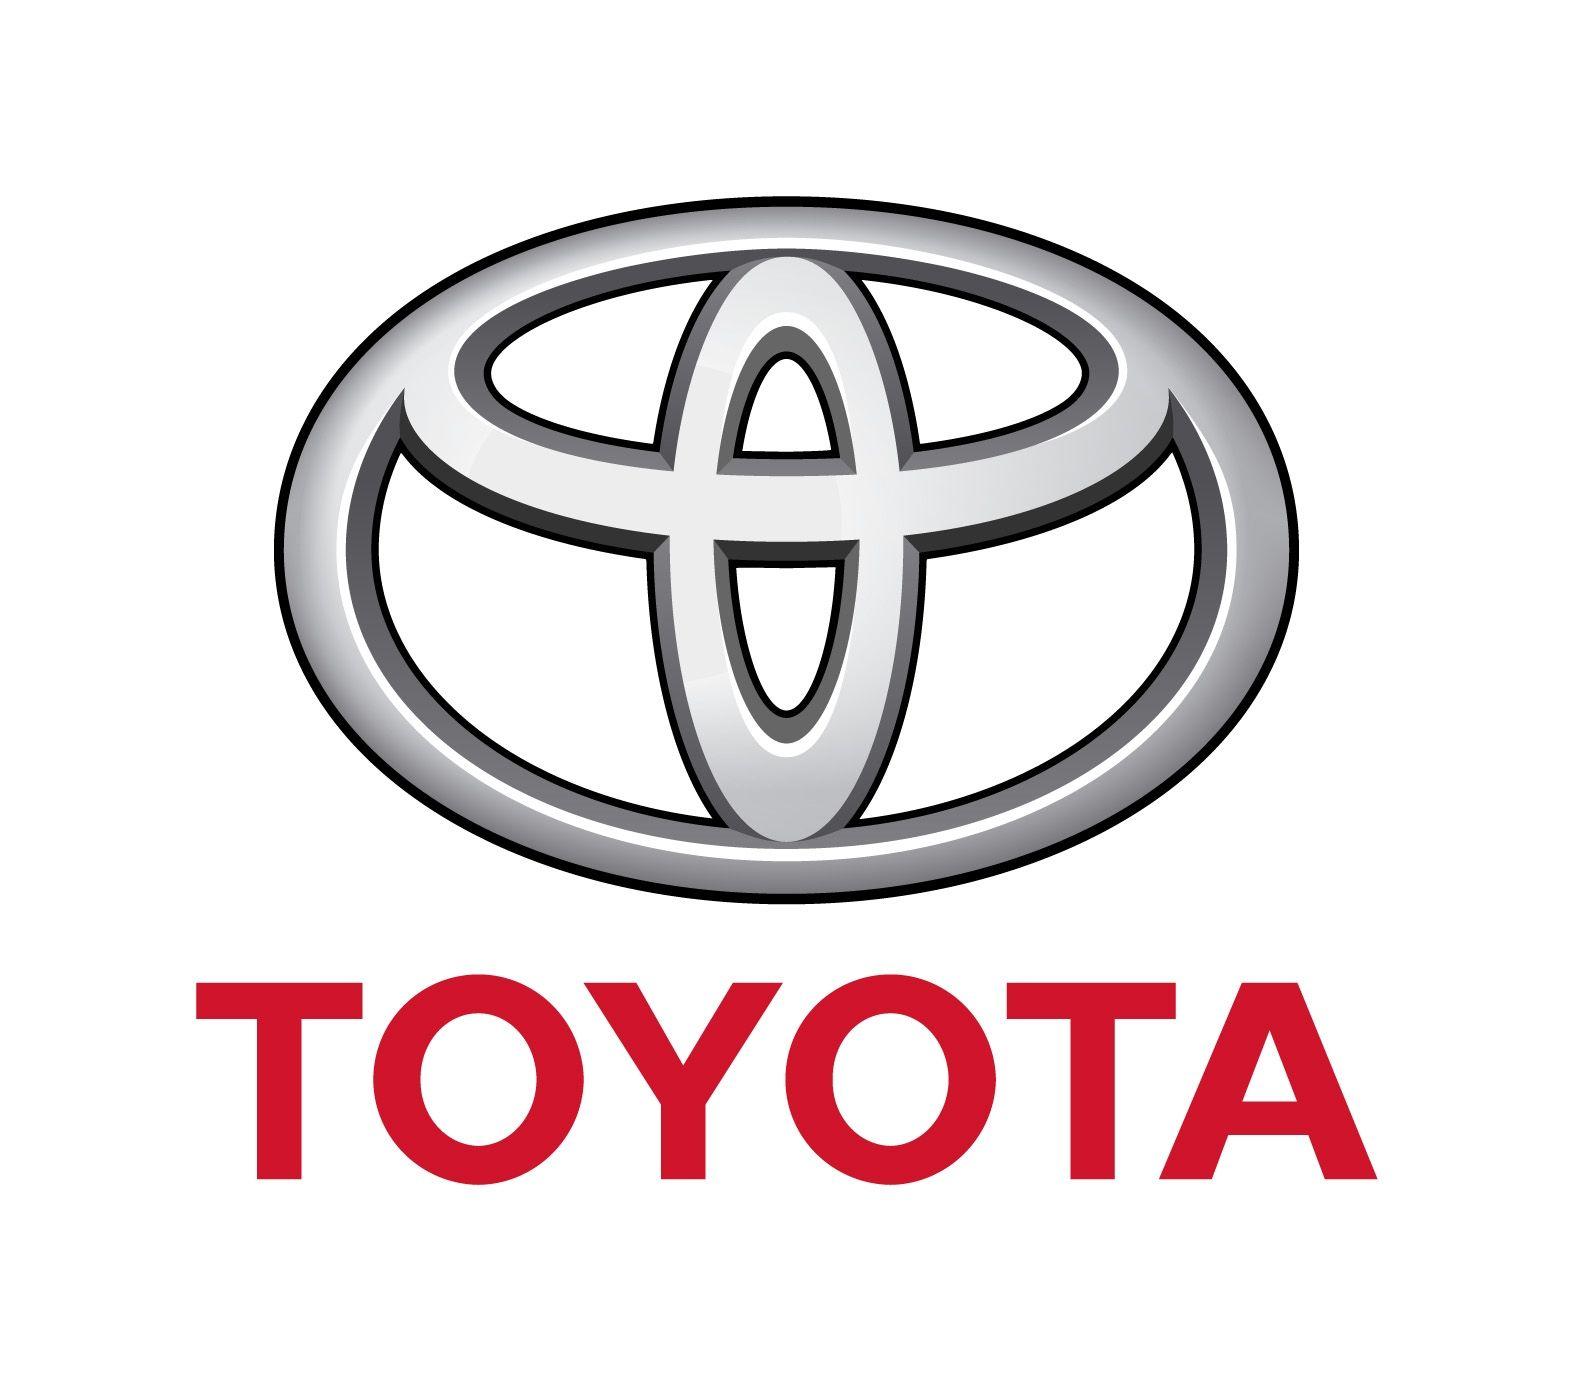 Japanese Automobile Logo - Japanese Car Brands, Companies and Manufacturers | Car Brand Names.com